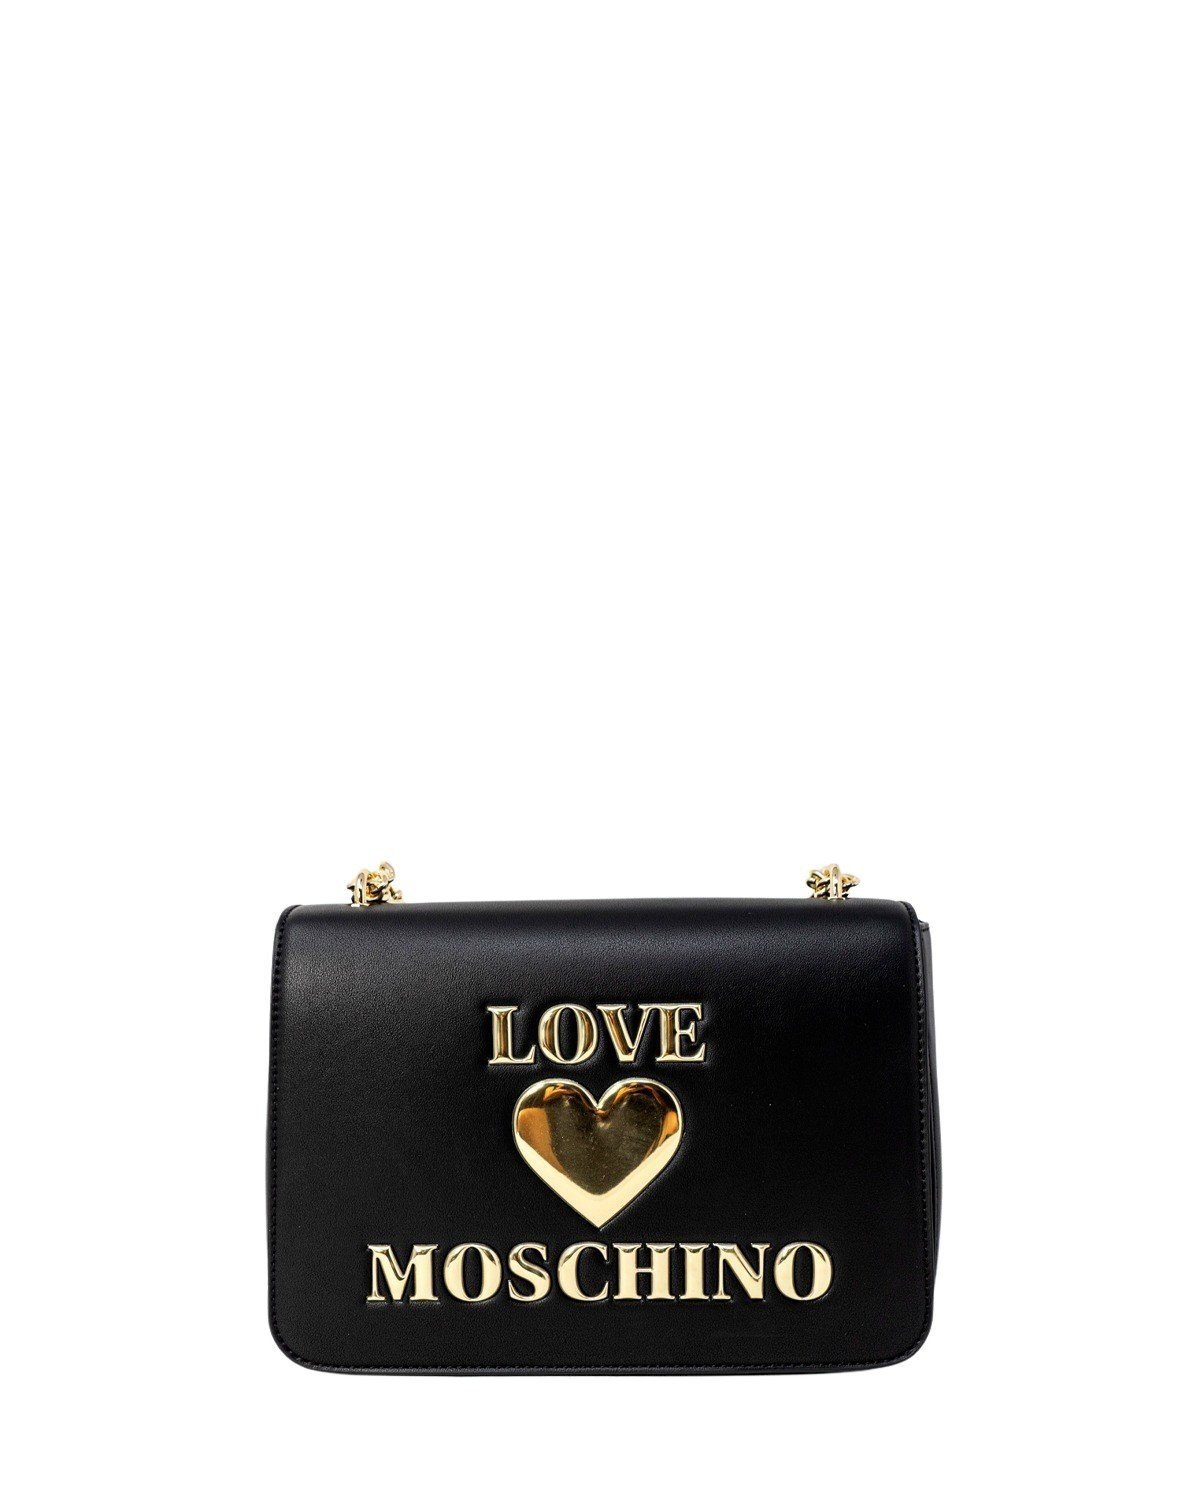 Love Moschino Women's Bag Red 305112 - black UNICA